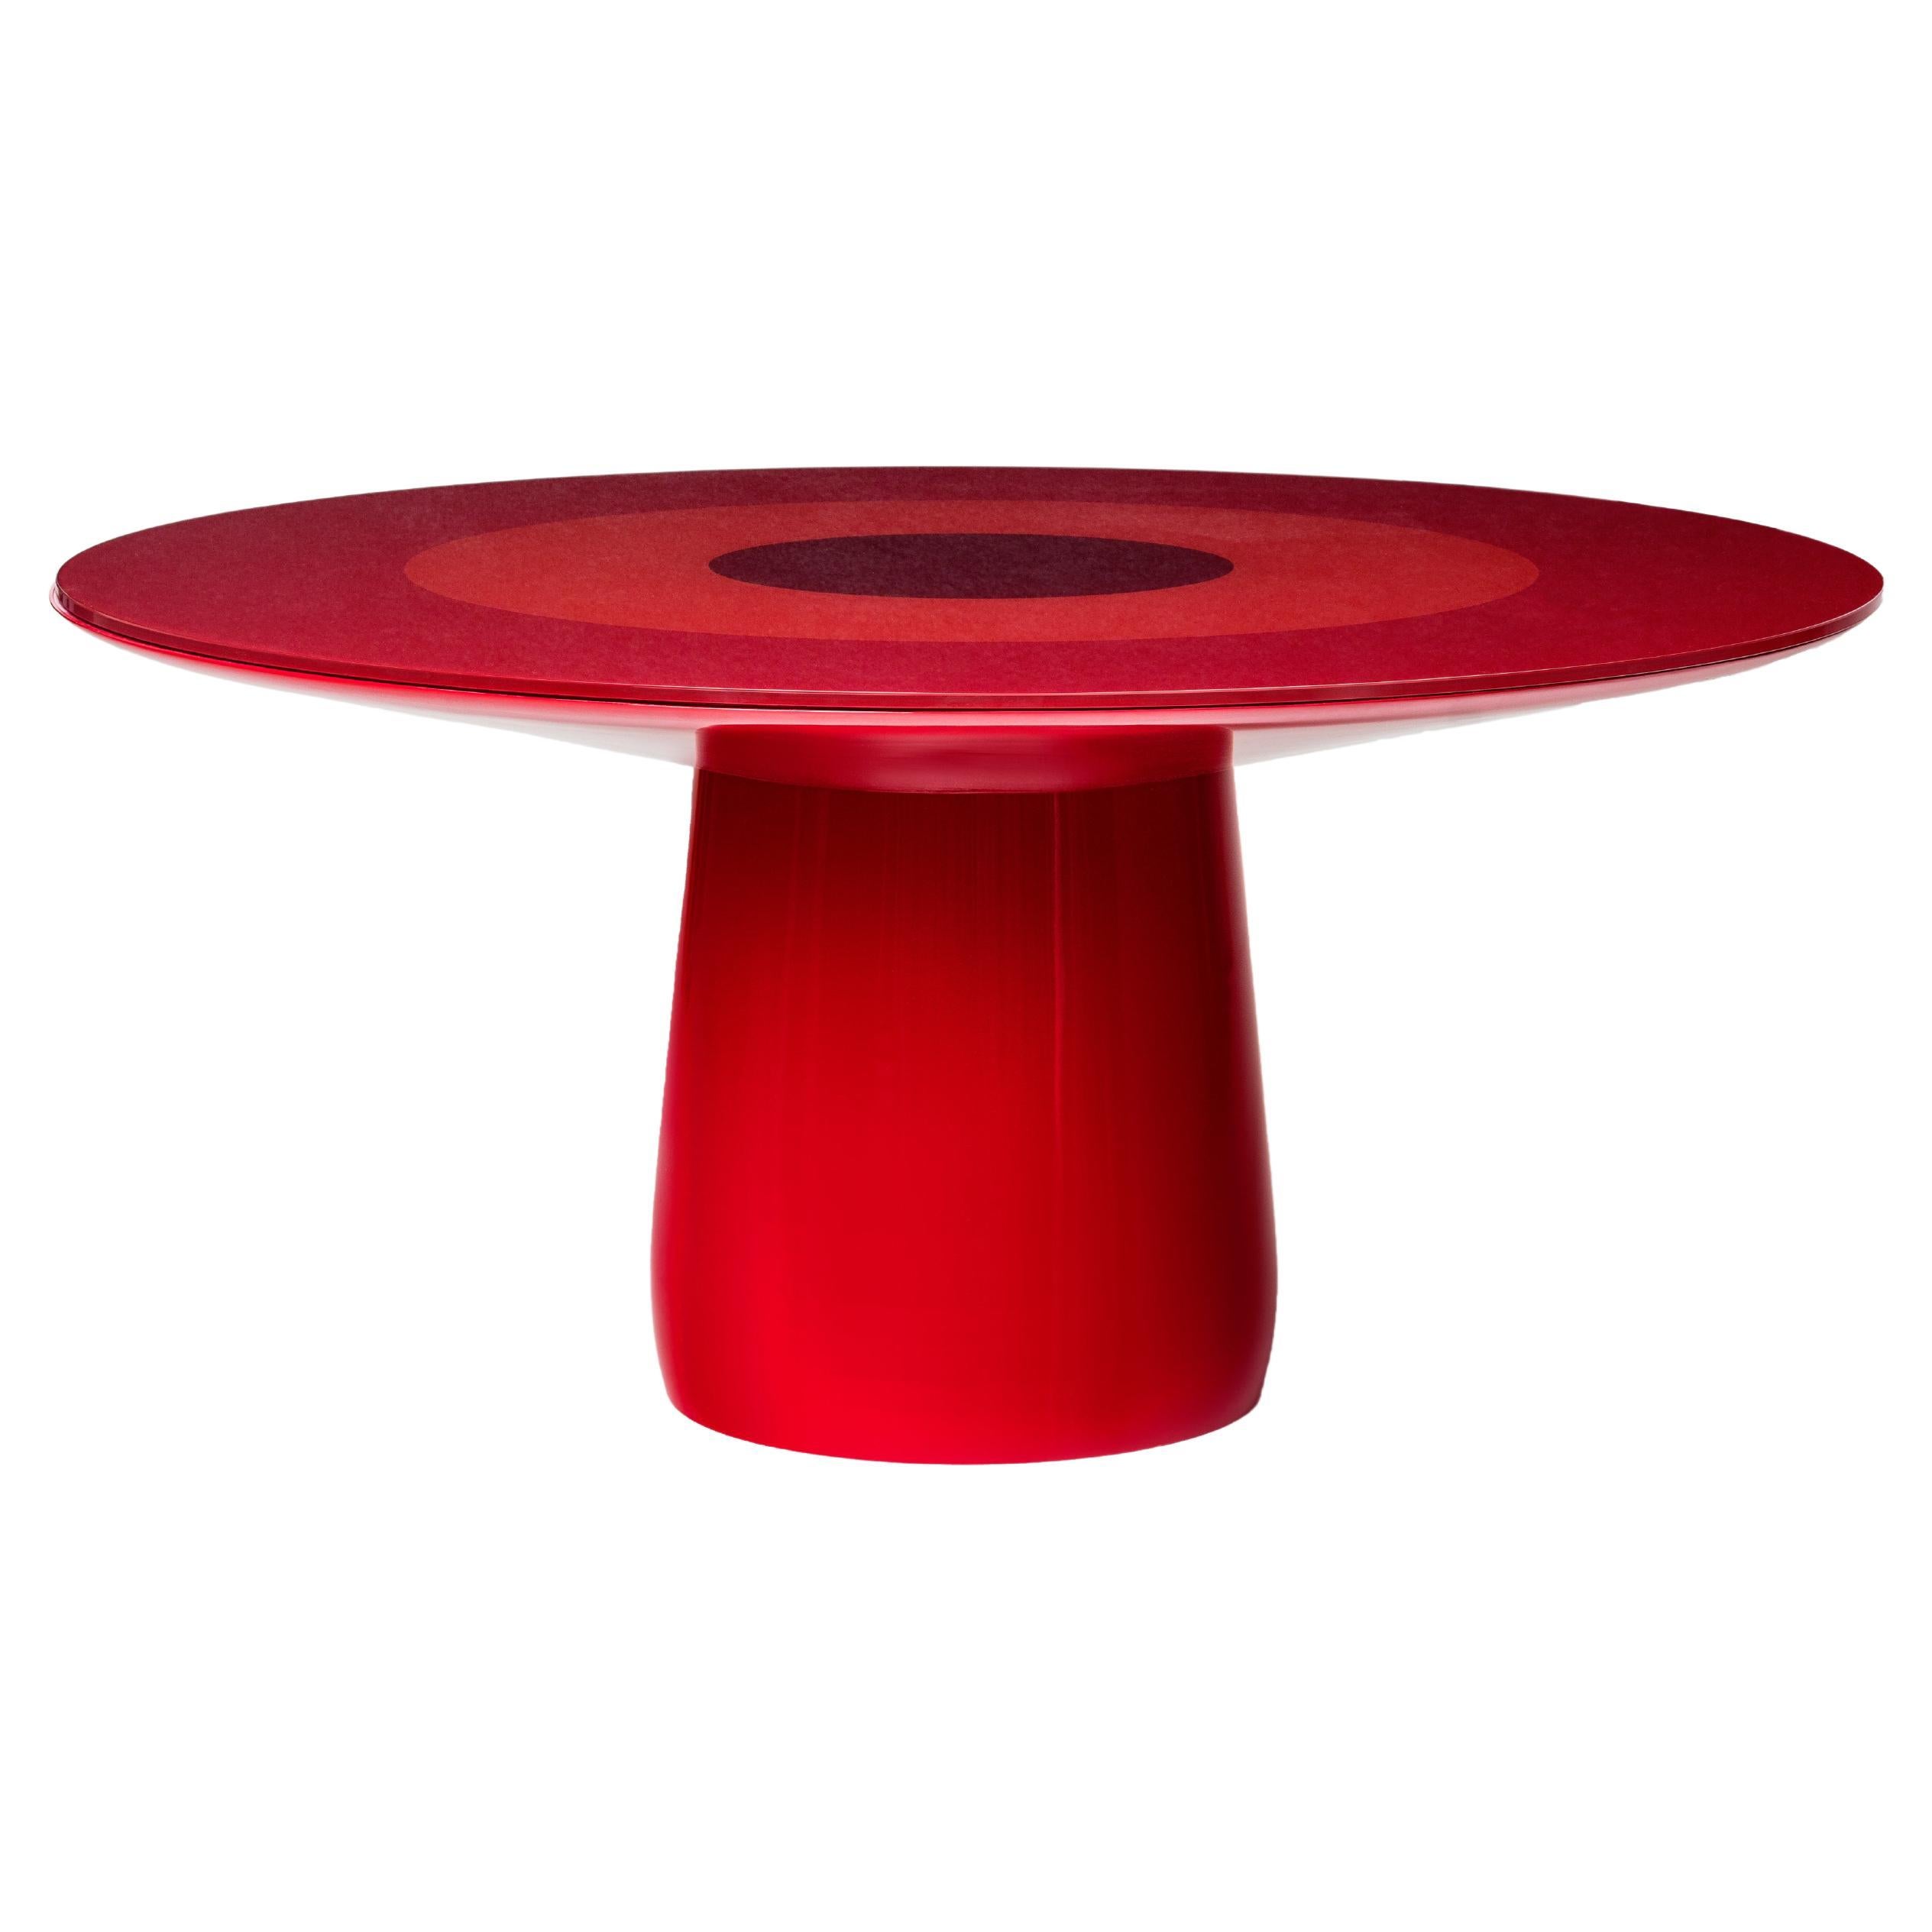 Baleri Italia Roundel Table with Red Lacquer & Glass Top, Claesson Koivisto Rune For Sale